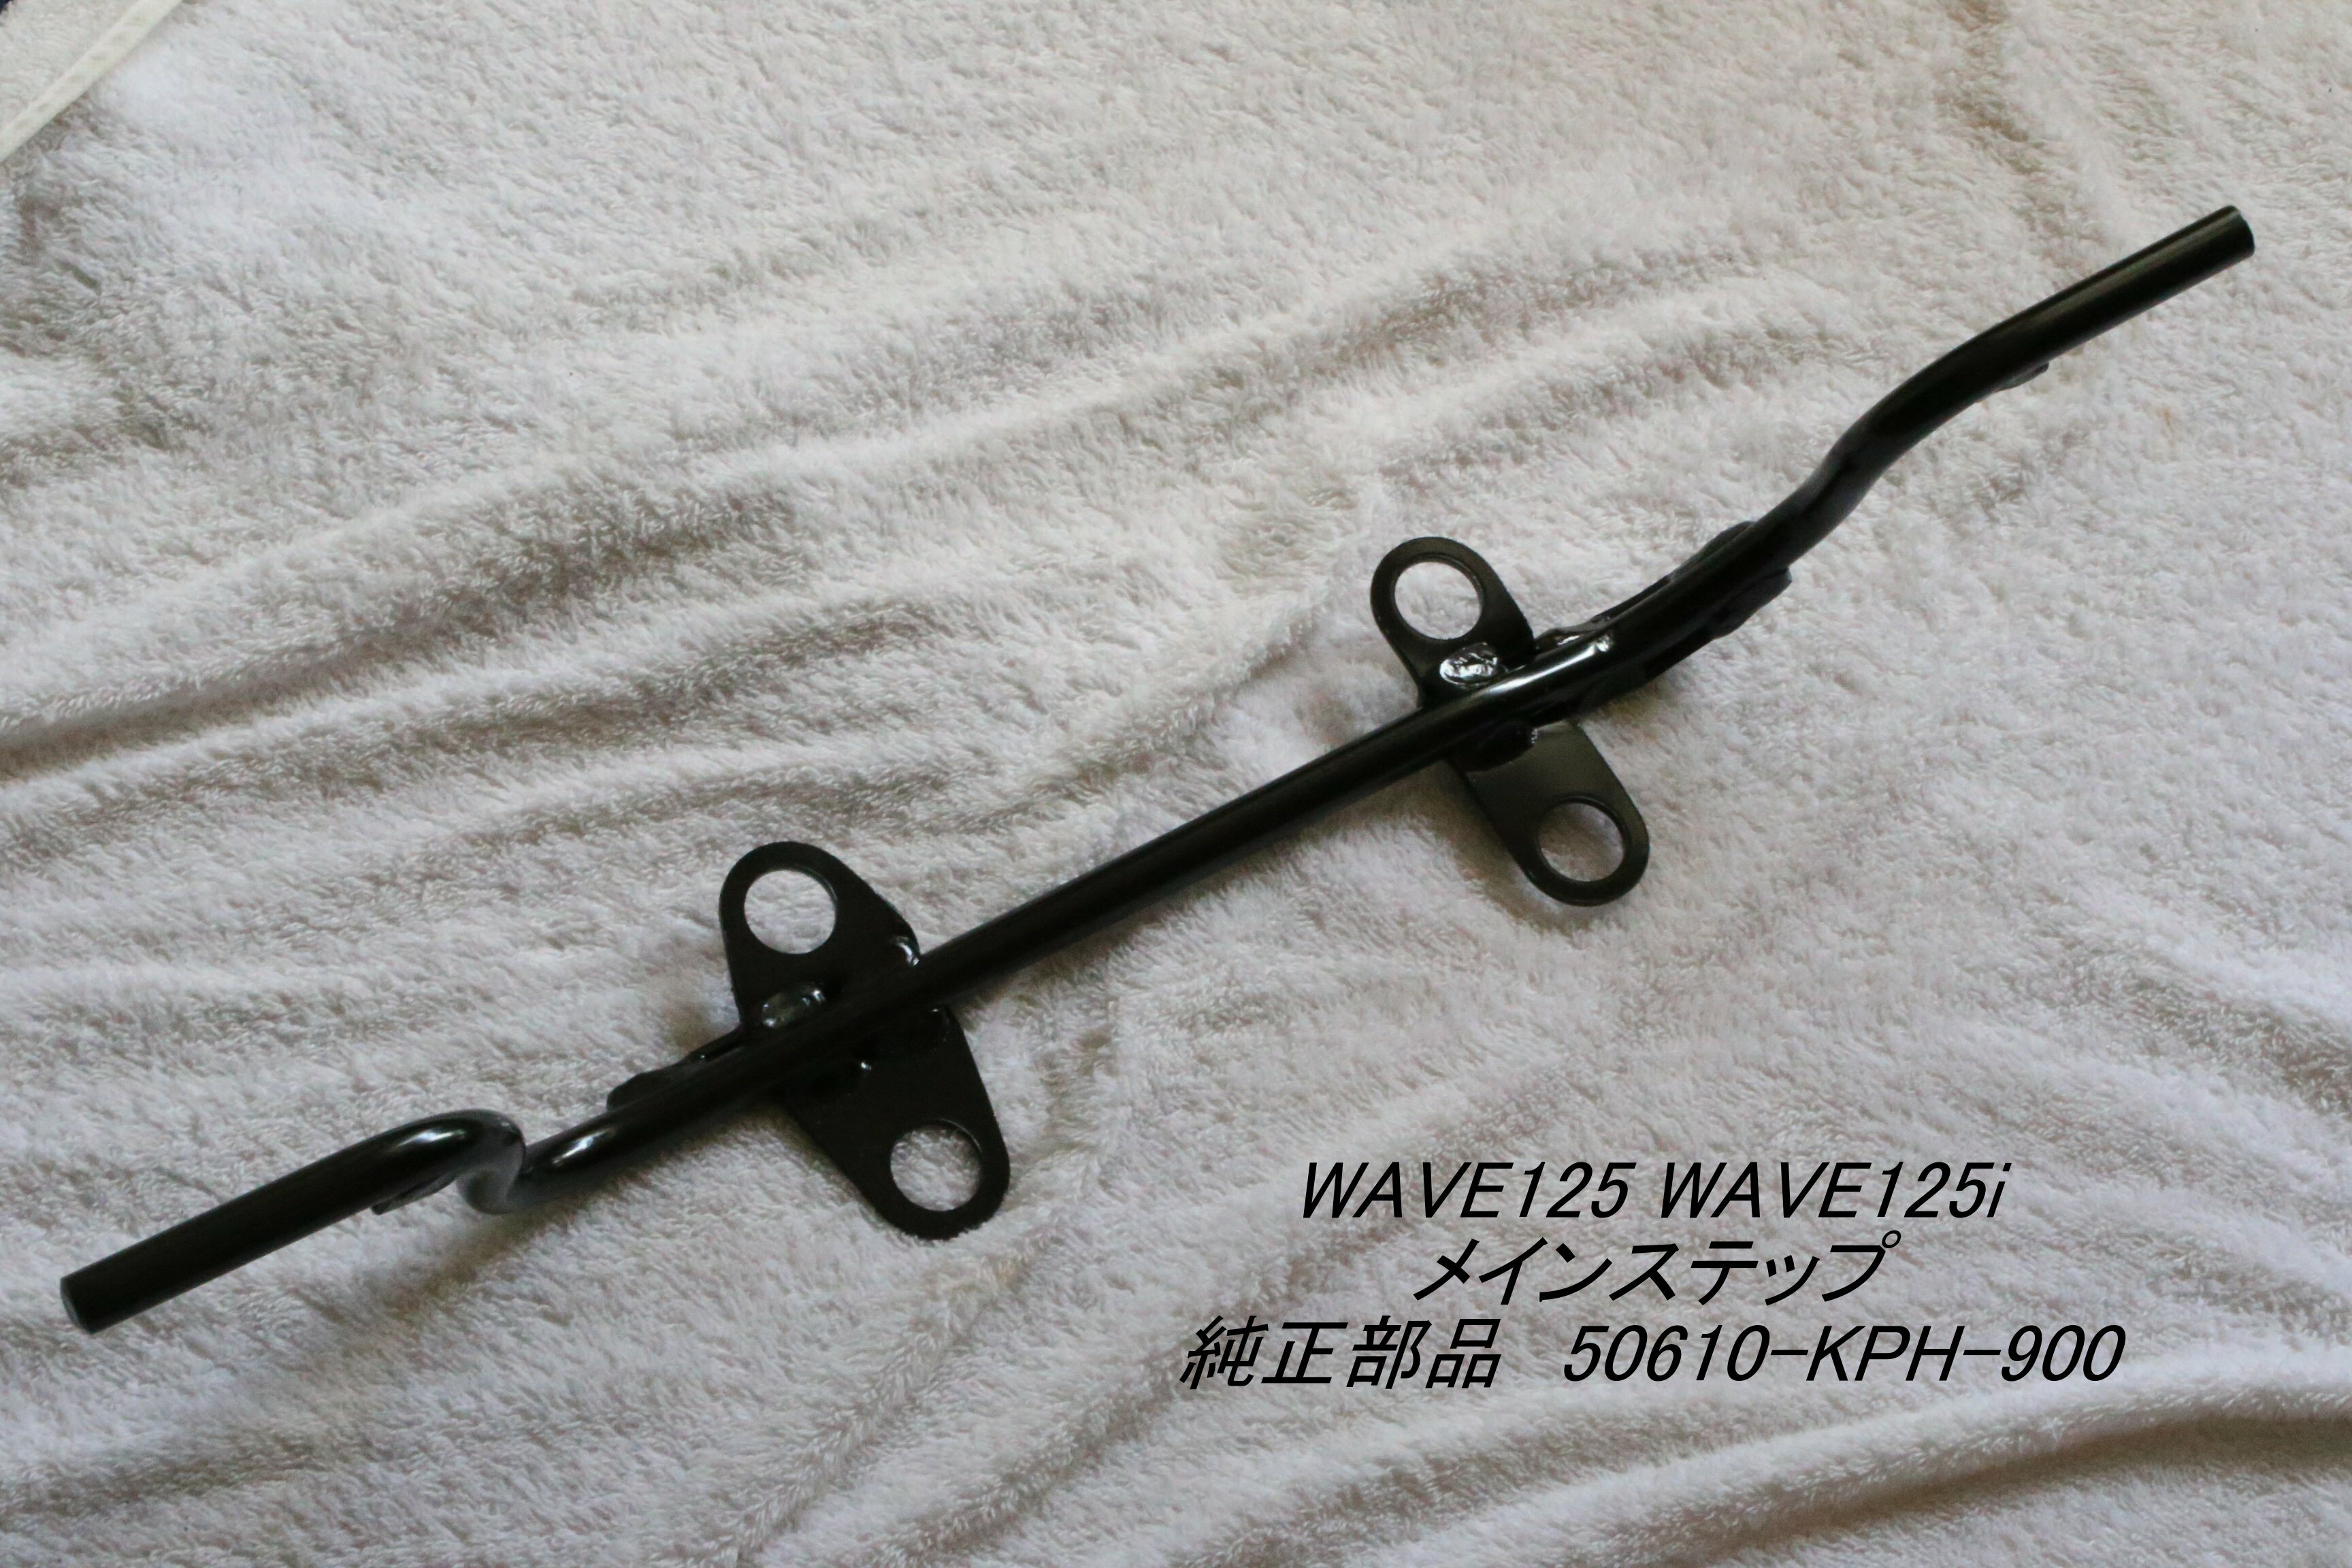 Wave125 Wave125i メインステップ 純正部品 Kph 900 タイからお届け